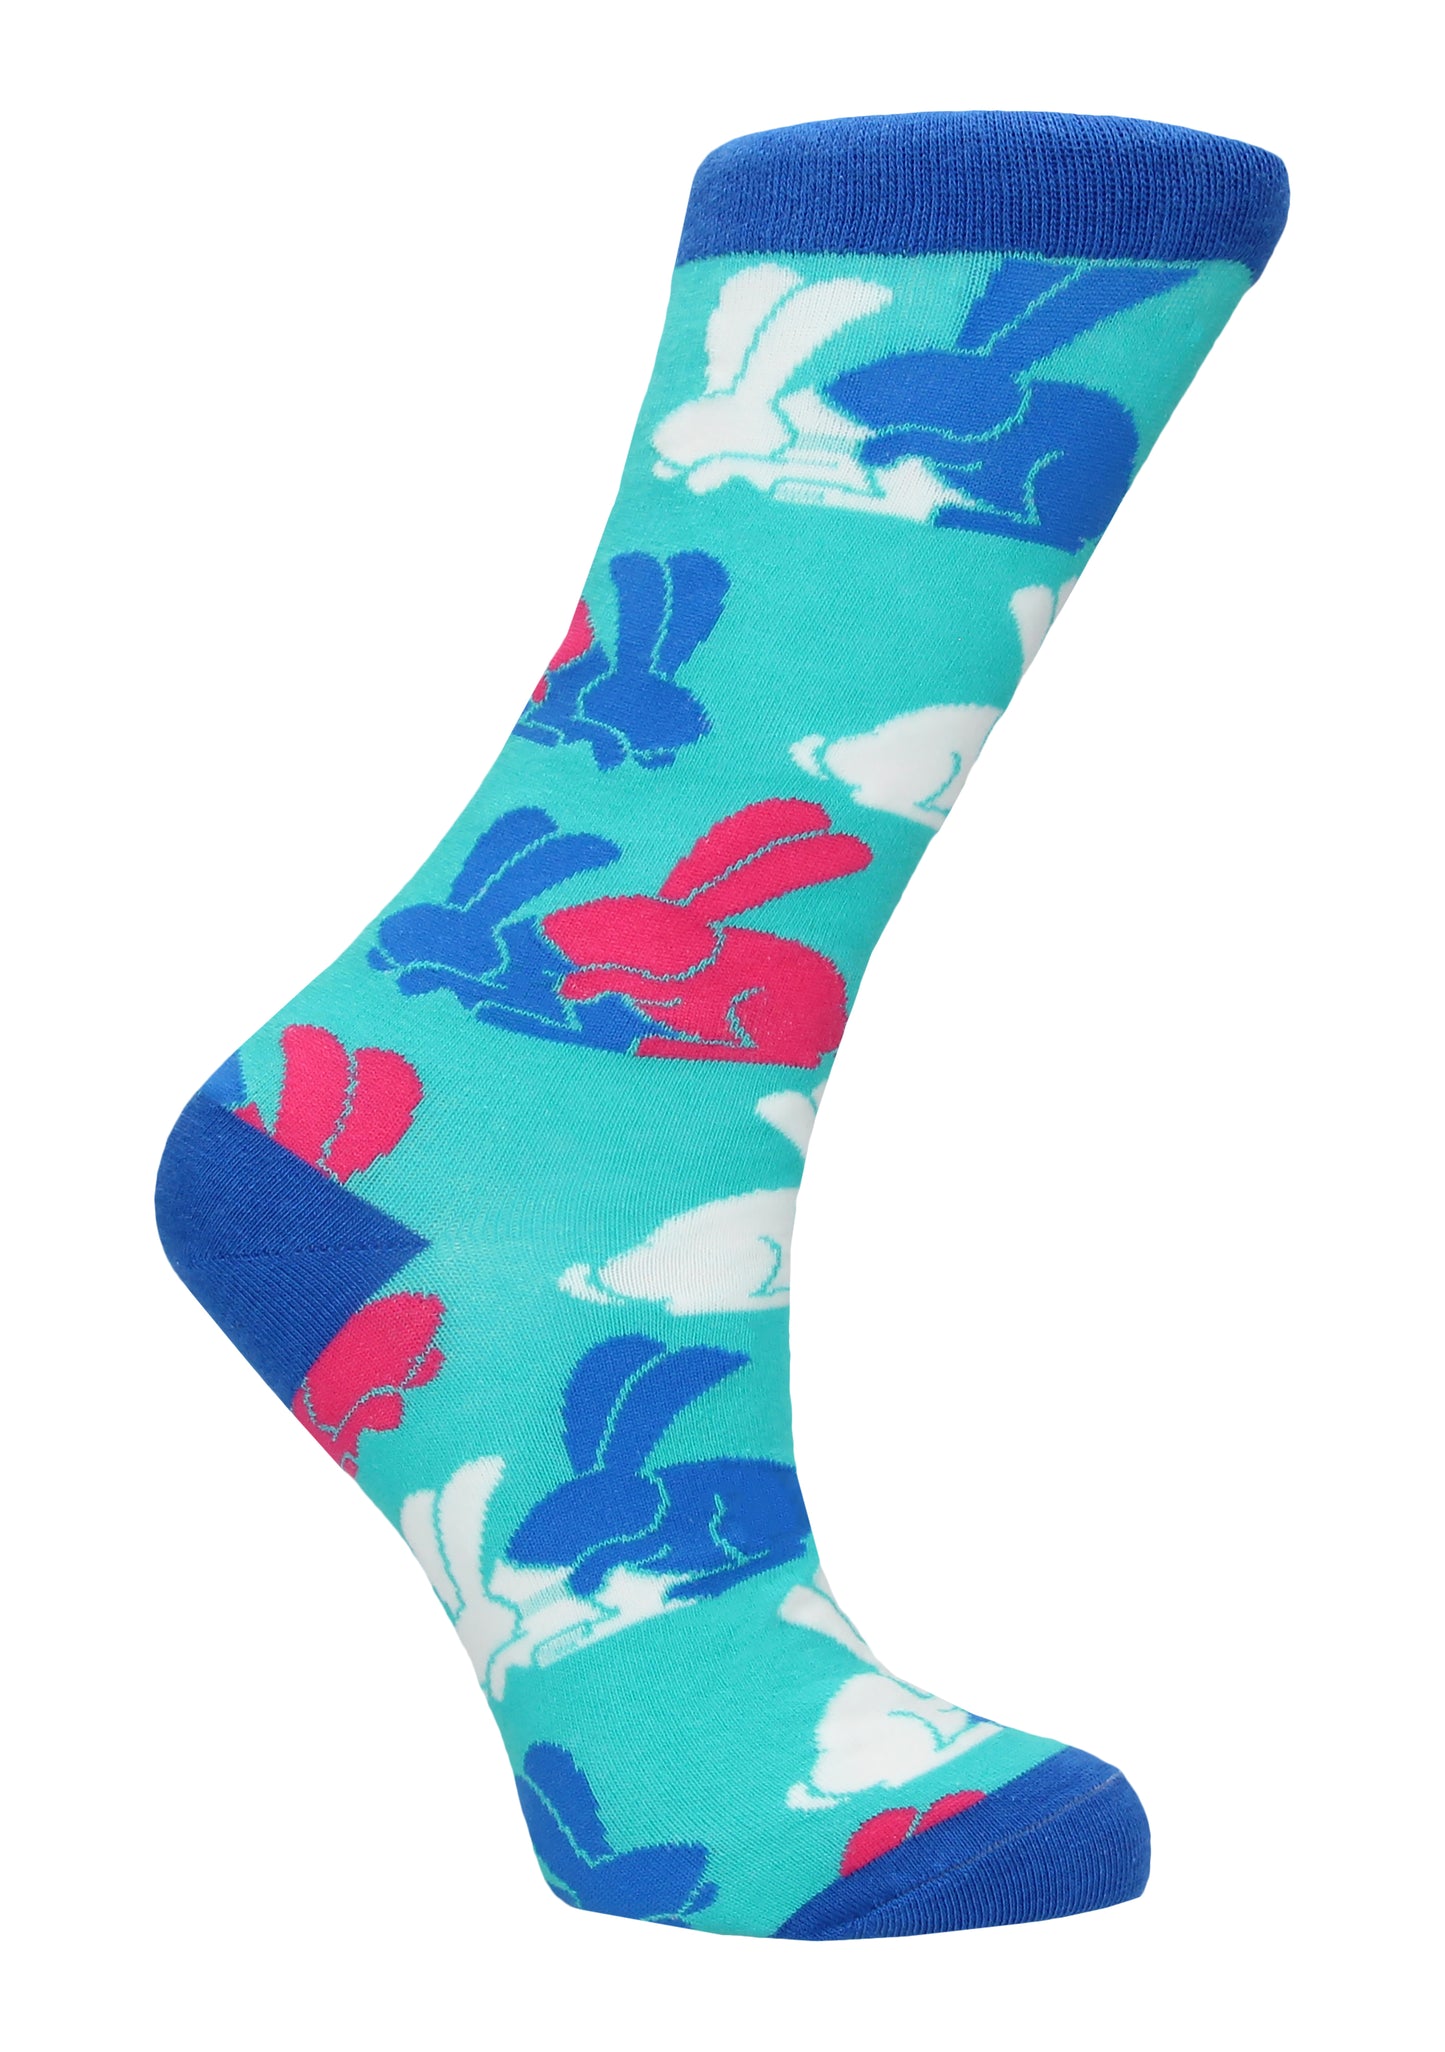 Sexy Socks - Bunny Style